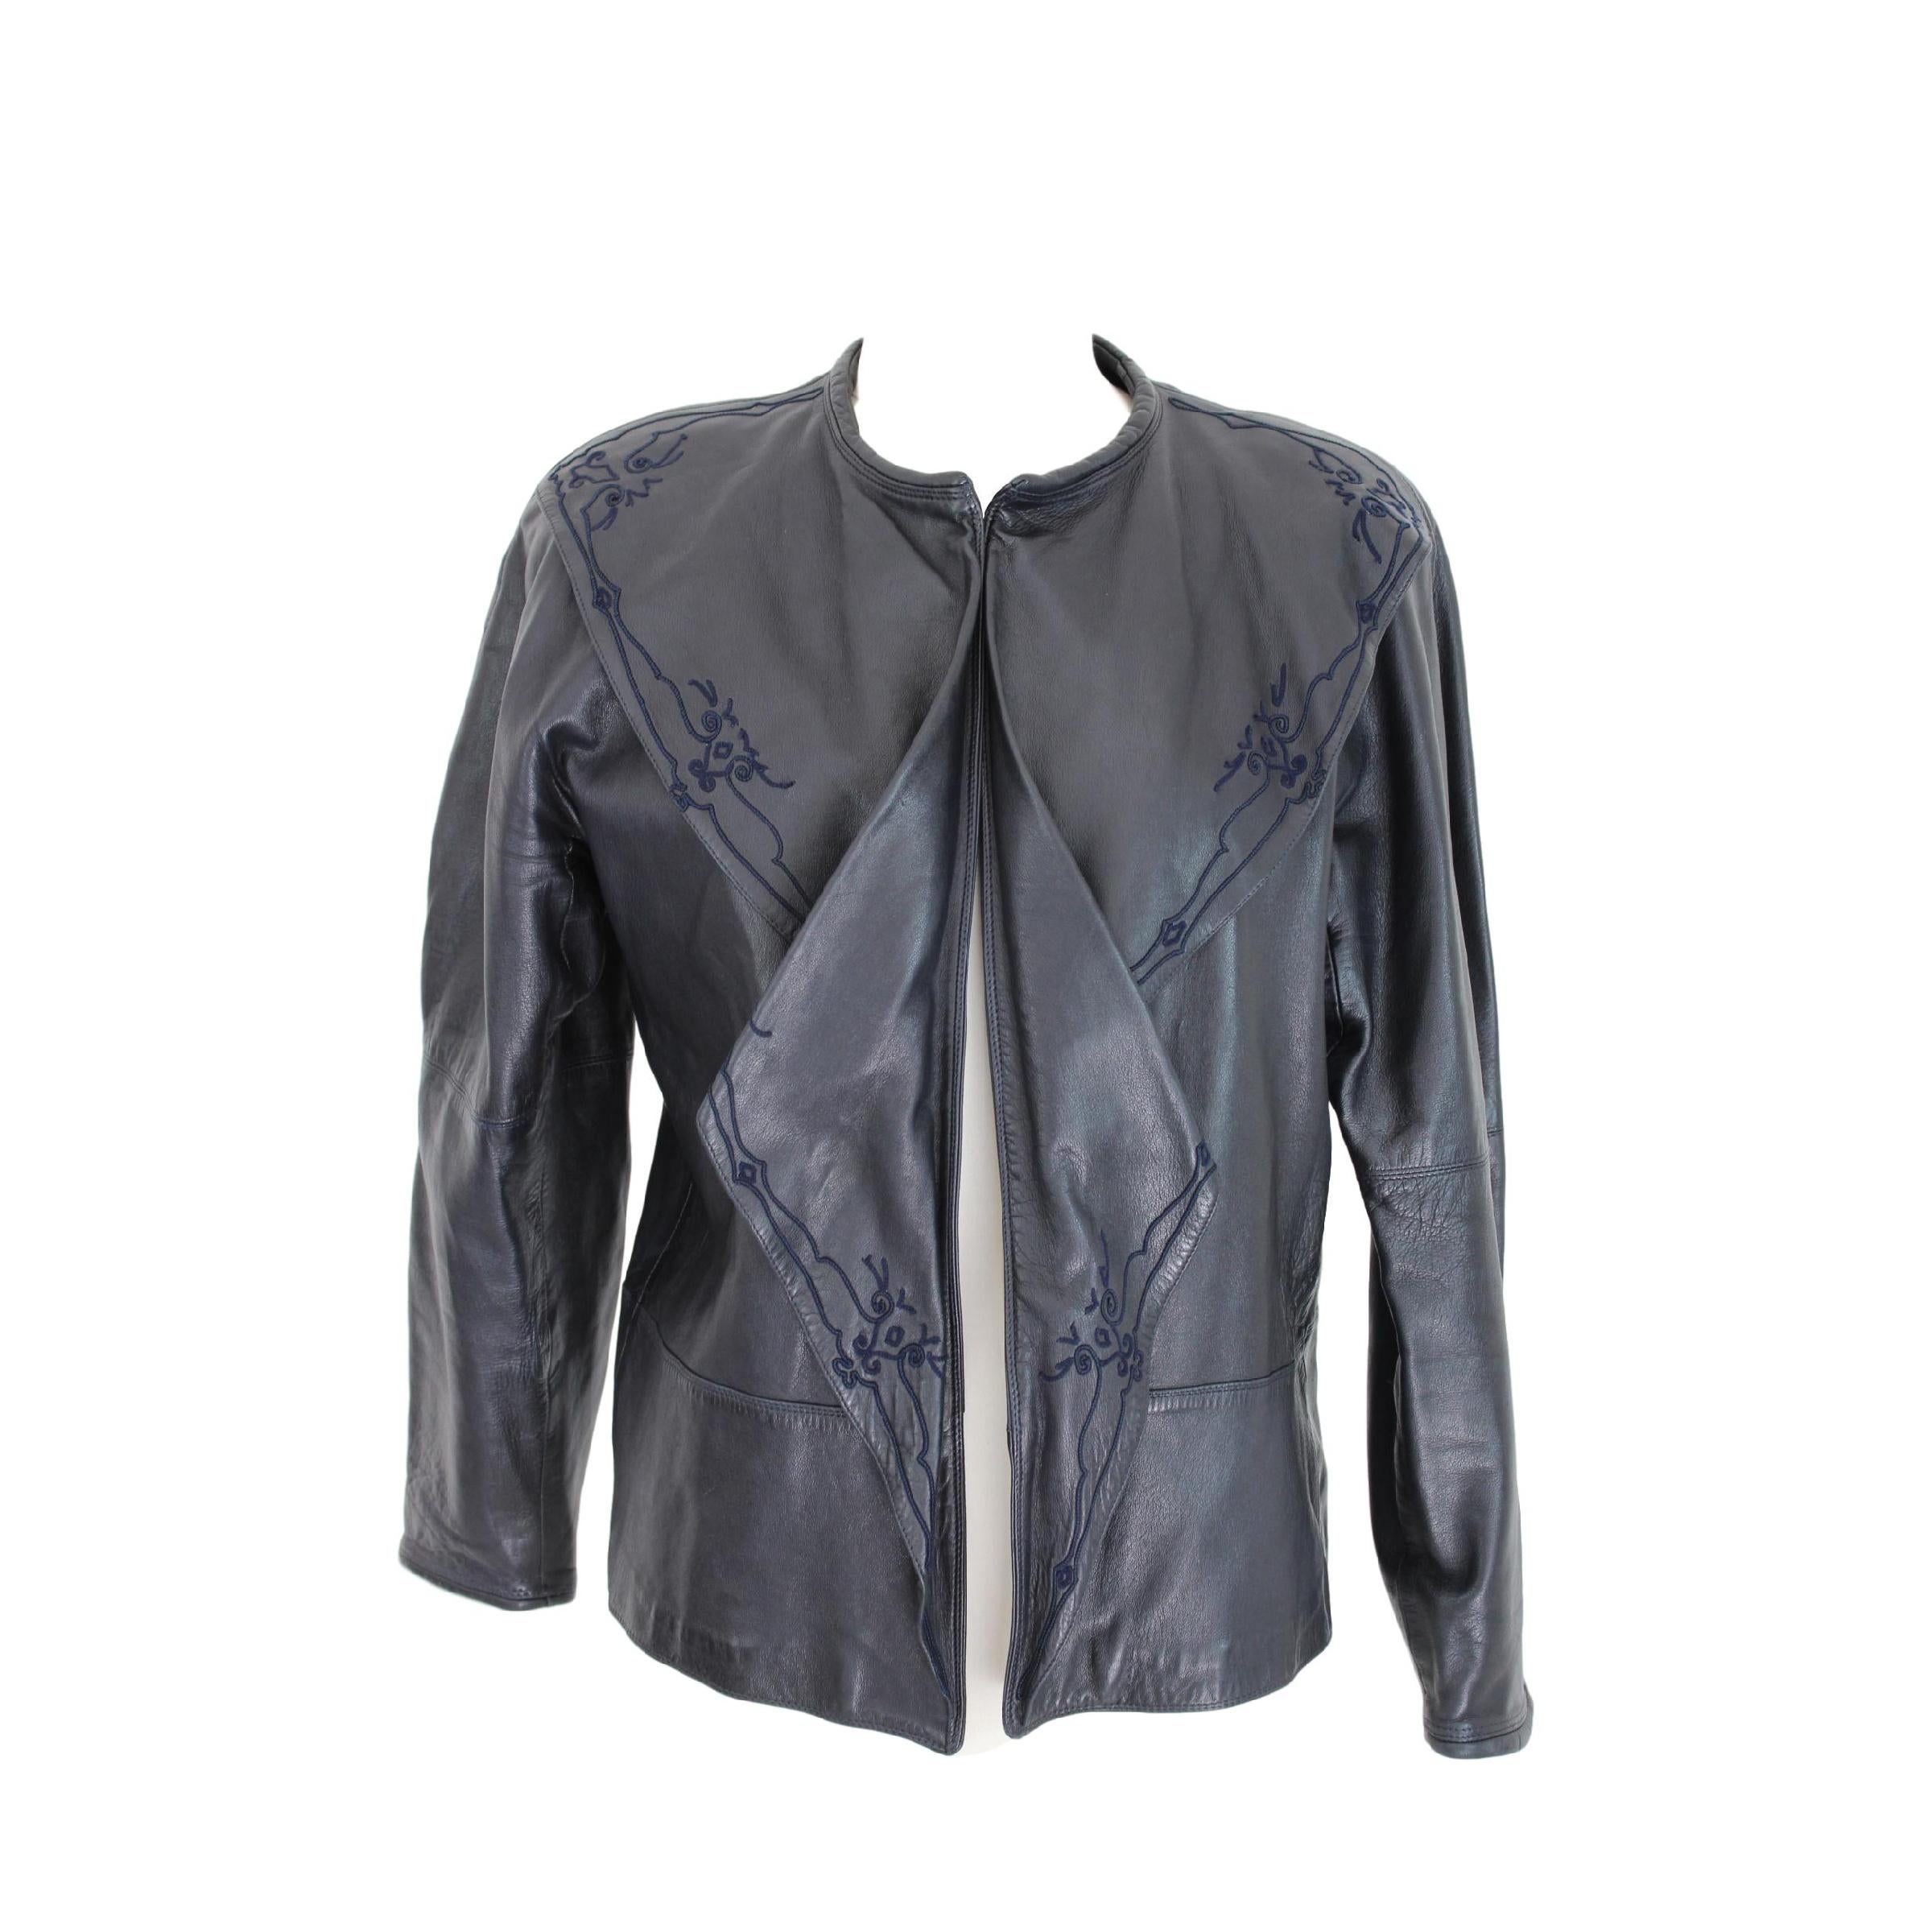 Gianni Versace Leather Jacket Embroidered Blue Short Bolero 1980s